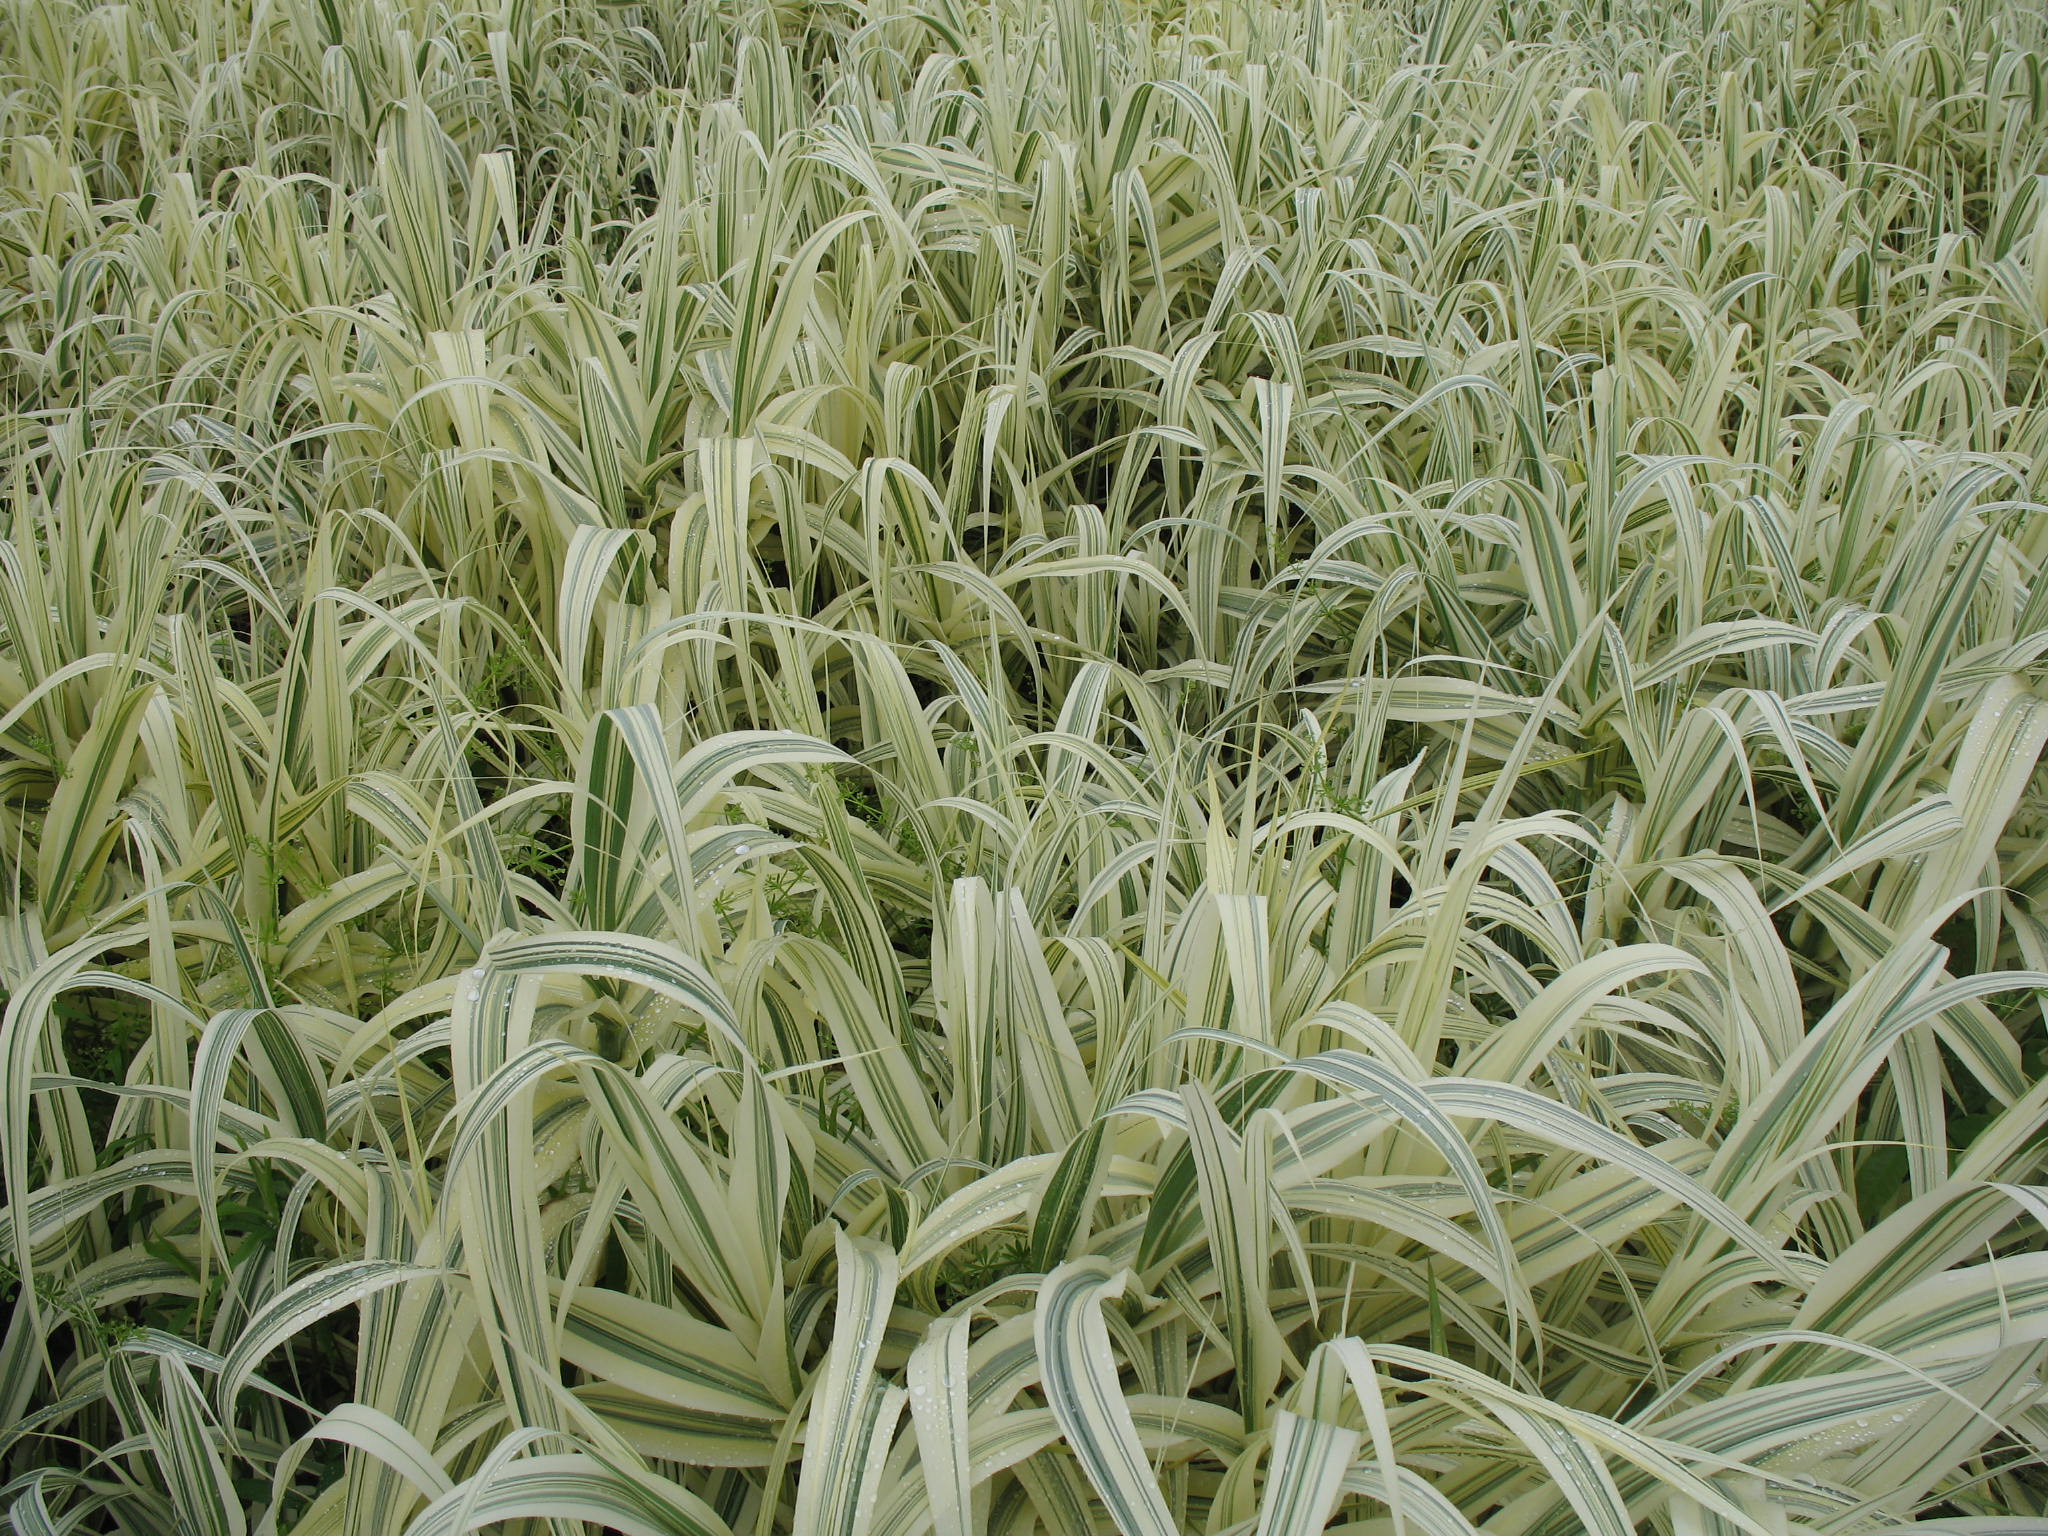 Arundo donax 'Variegata'  / Variegated Giant Reed